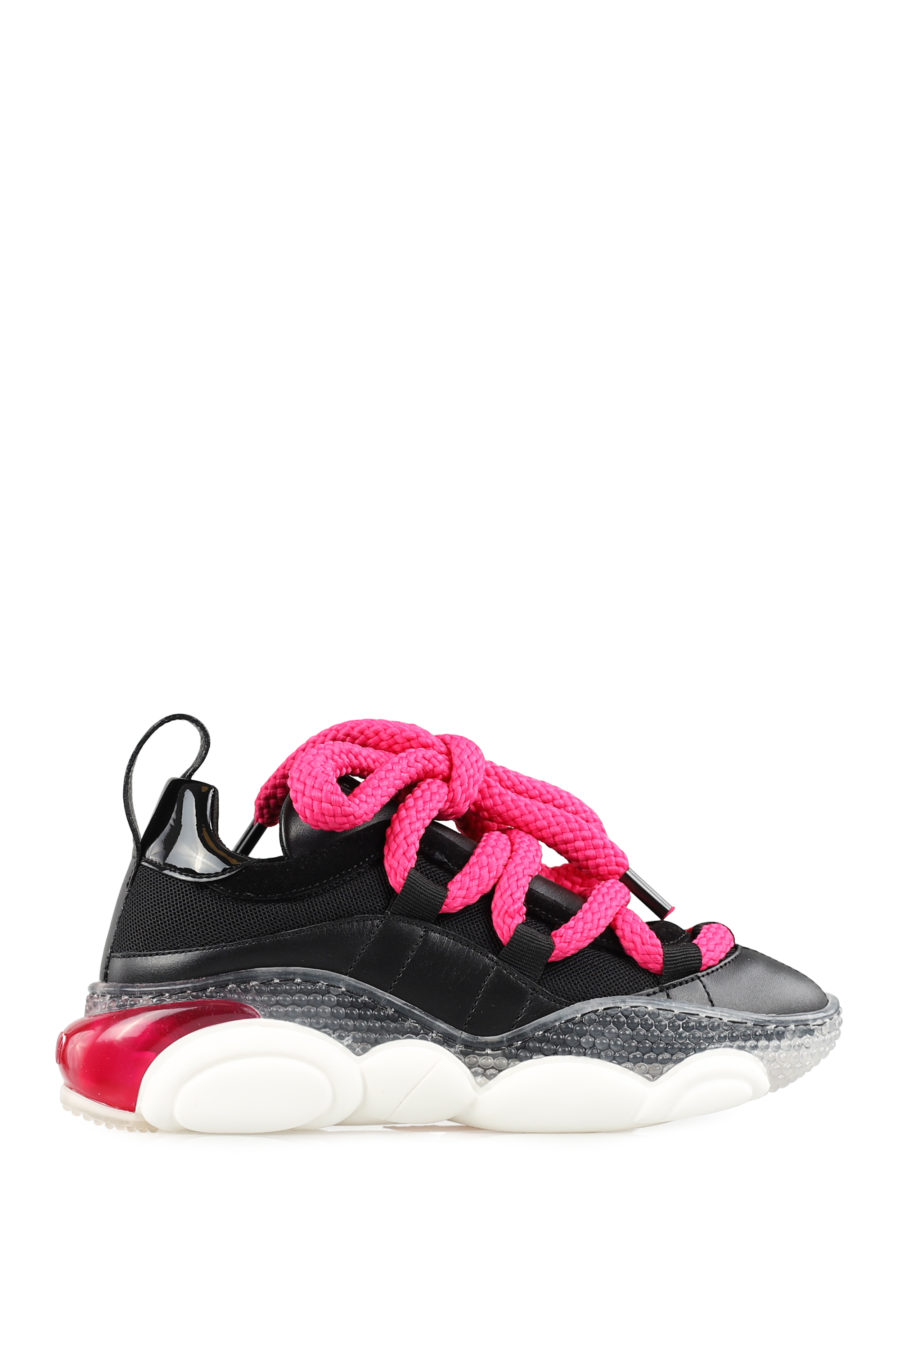 Zapatillas negras "BubbleTeddy" con maxicordones color rosa - 29896d02a09f560be252ee18e2765790542b3bd5